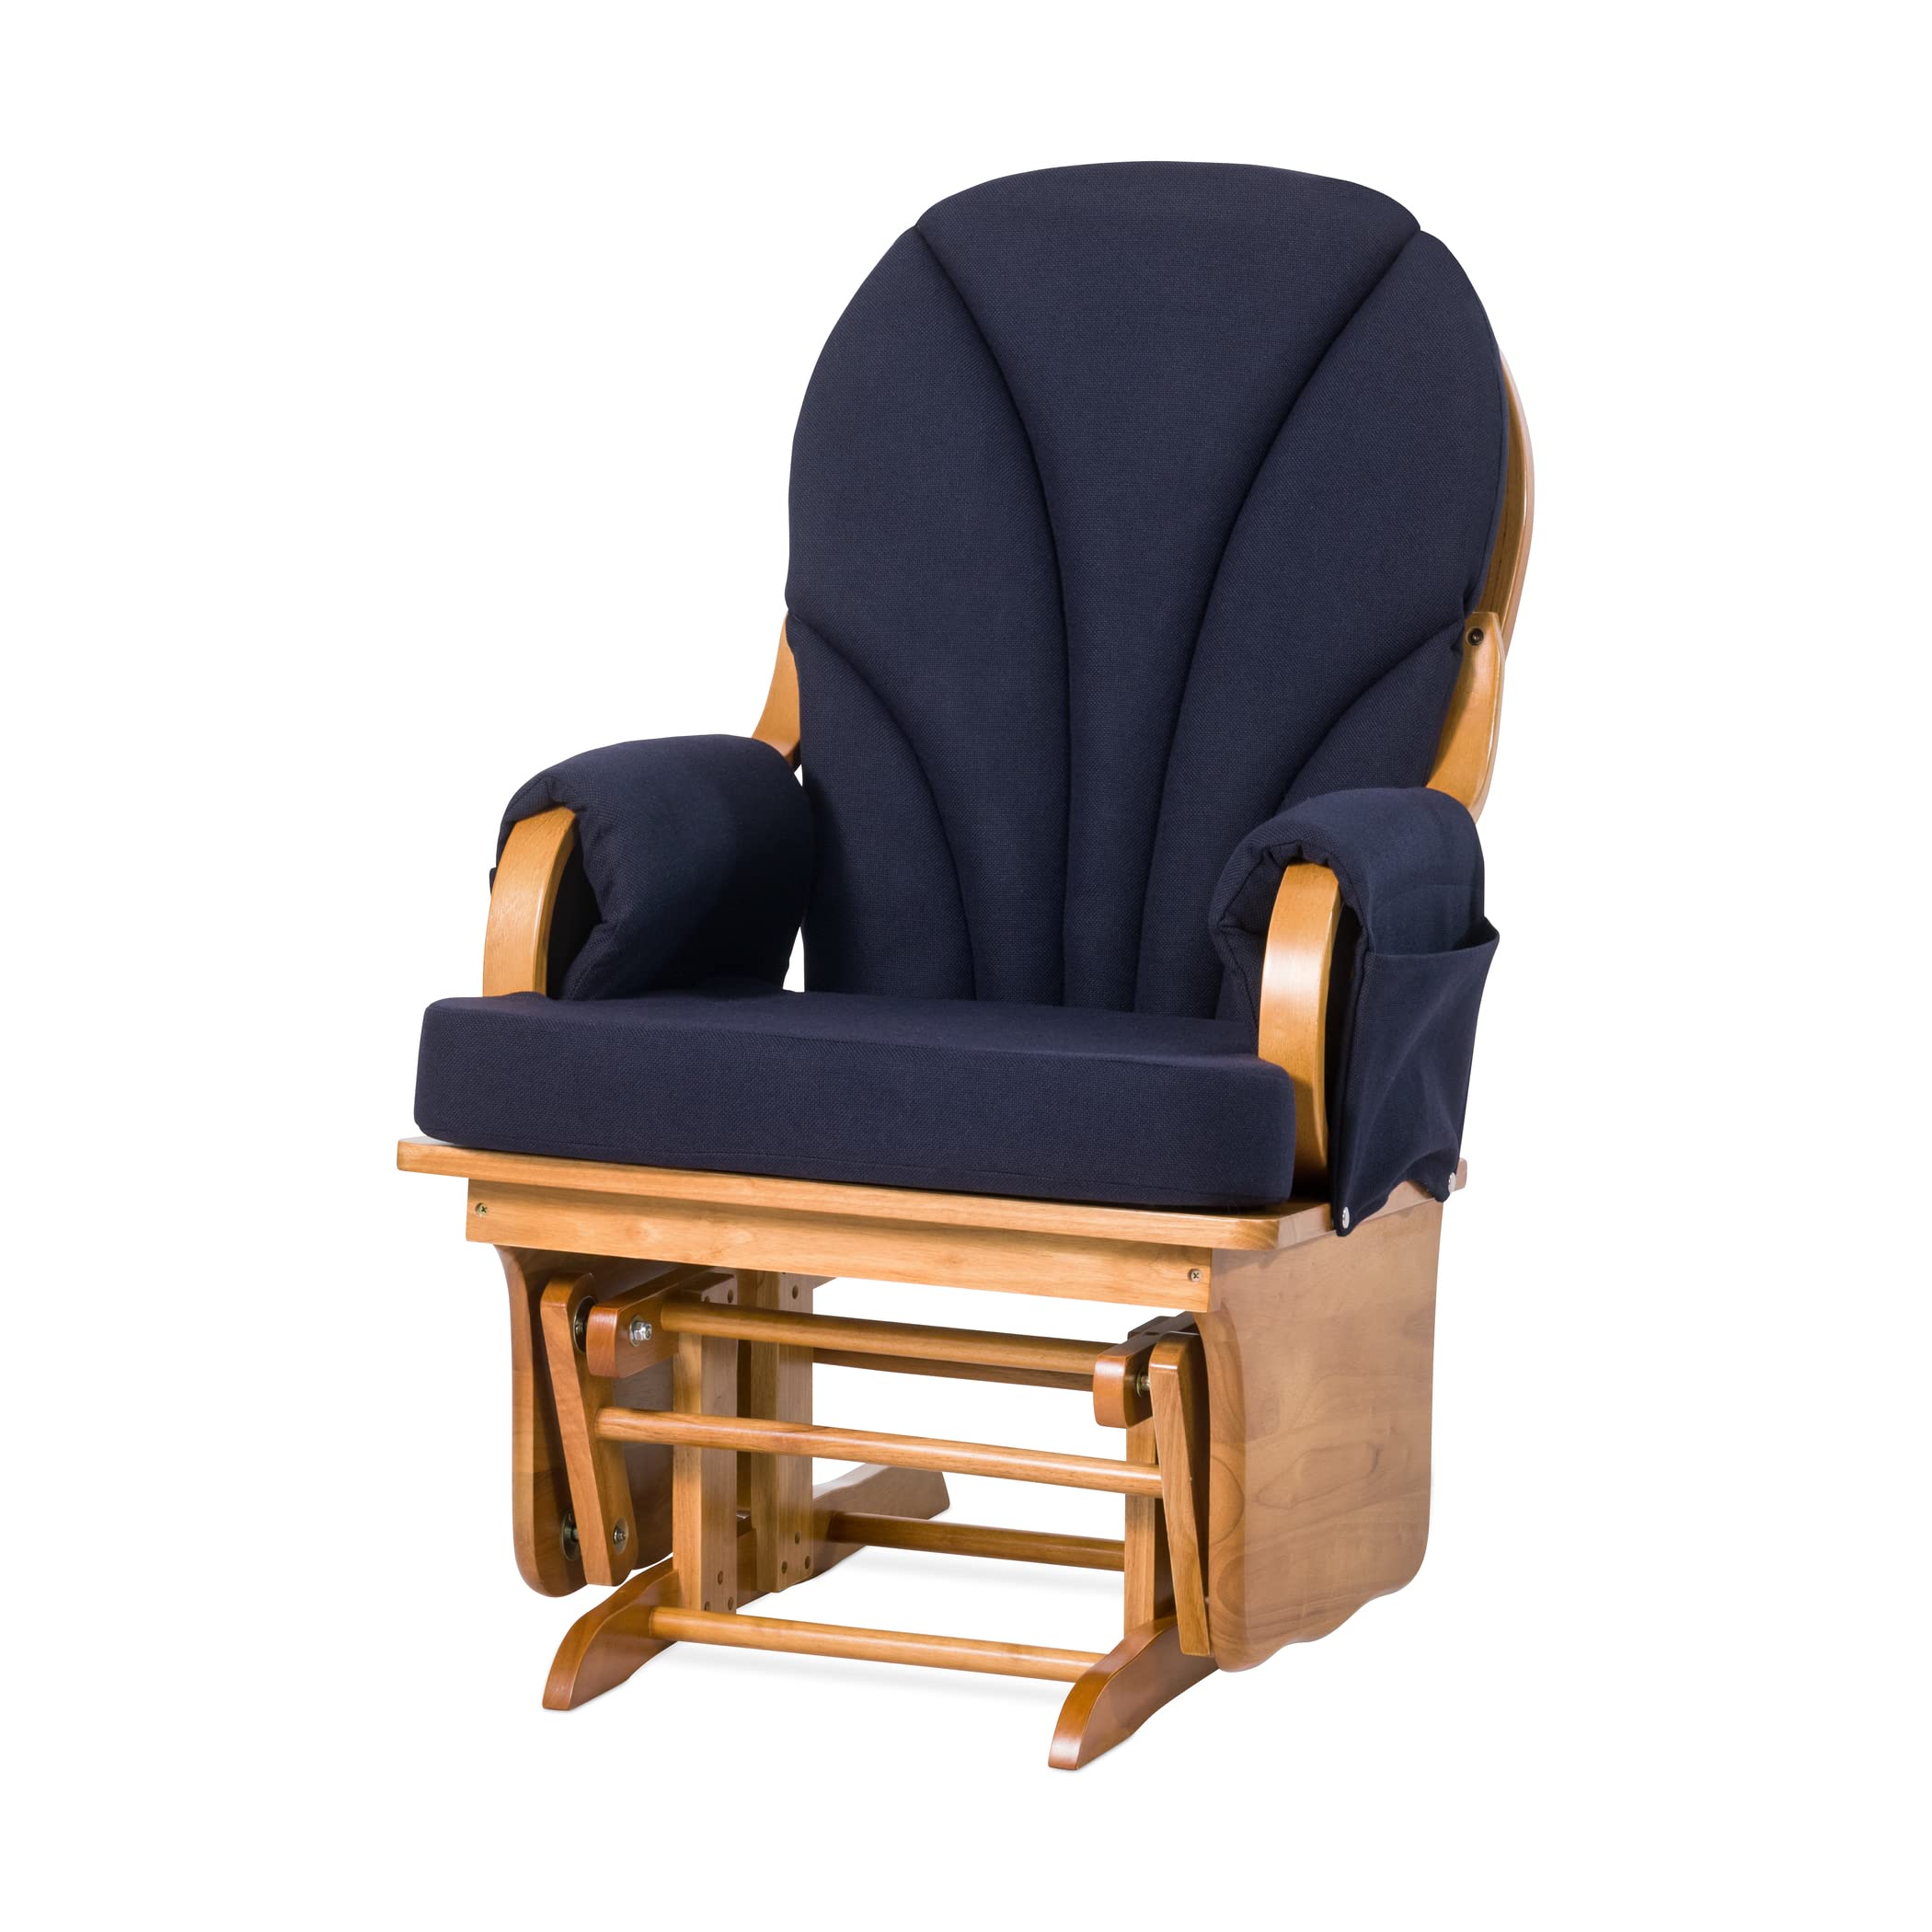 Foundations Lullaby Glider Rocker Chair for Nursery or Daycare, Solid Wood Base Frame, Padded Foam Arm Rests, Side Storage Pockets, Designed for Comfort (Natural/Blue)